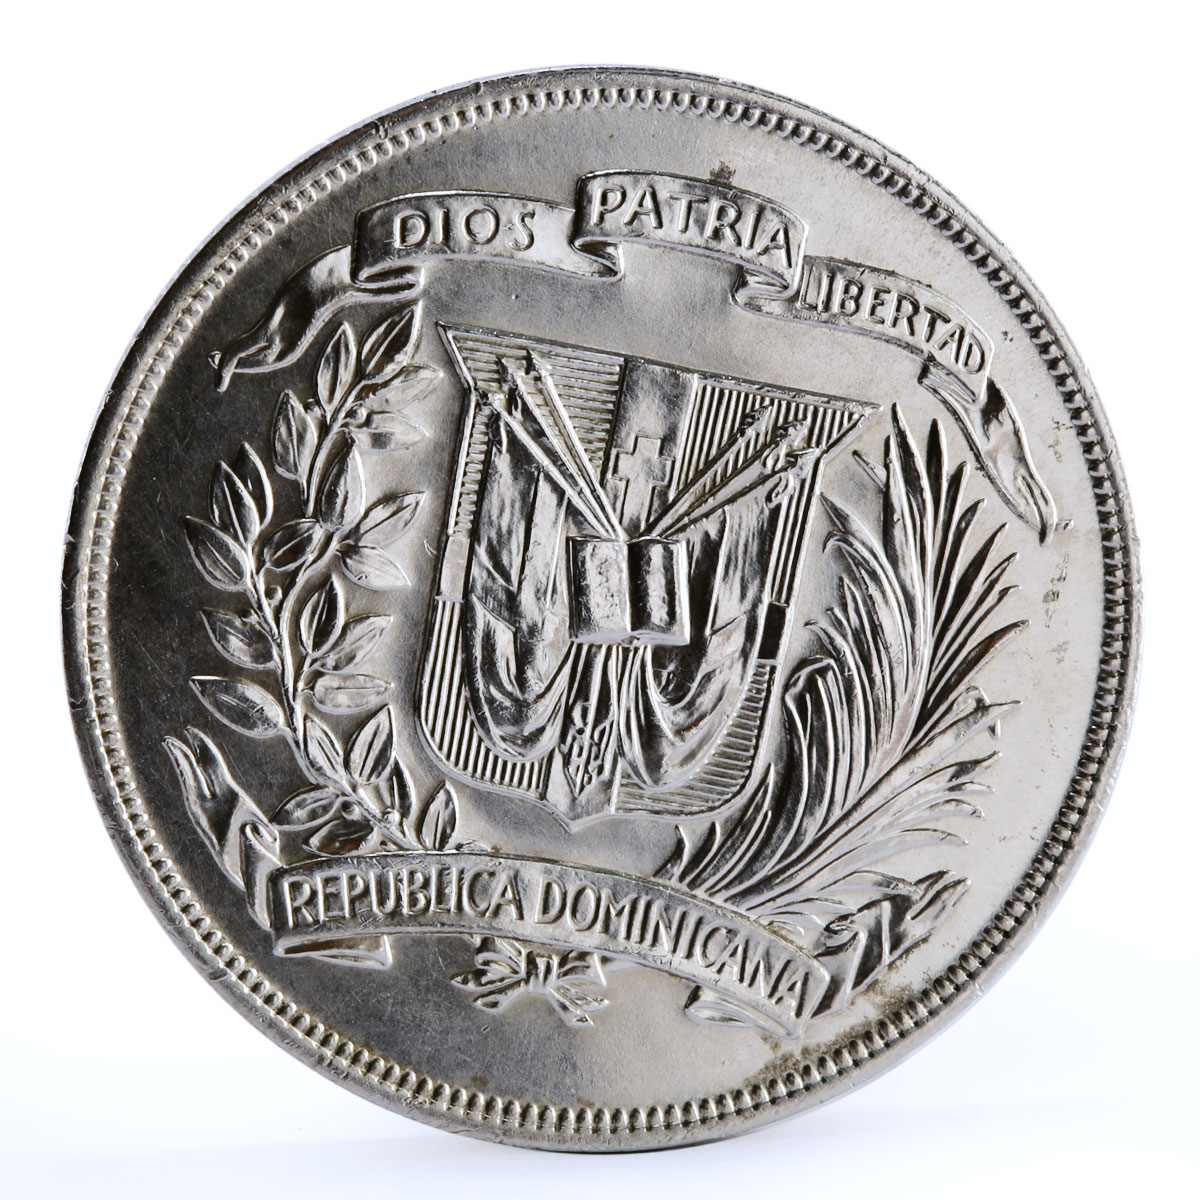 Dominican Republic 1 peso 12th American and Caribbean Games silver coin 1974